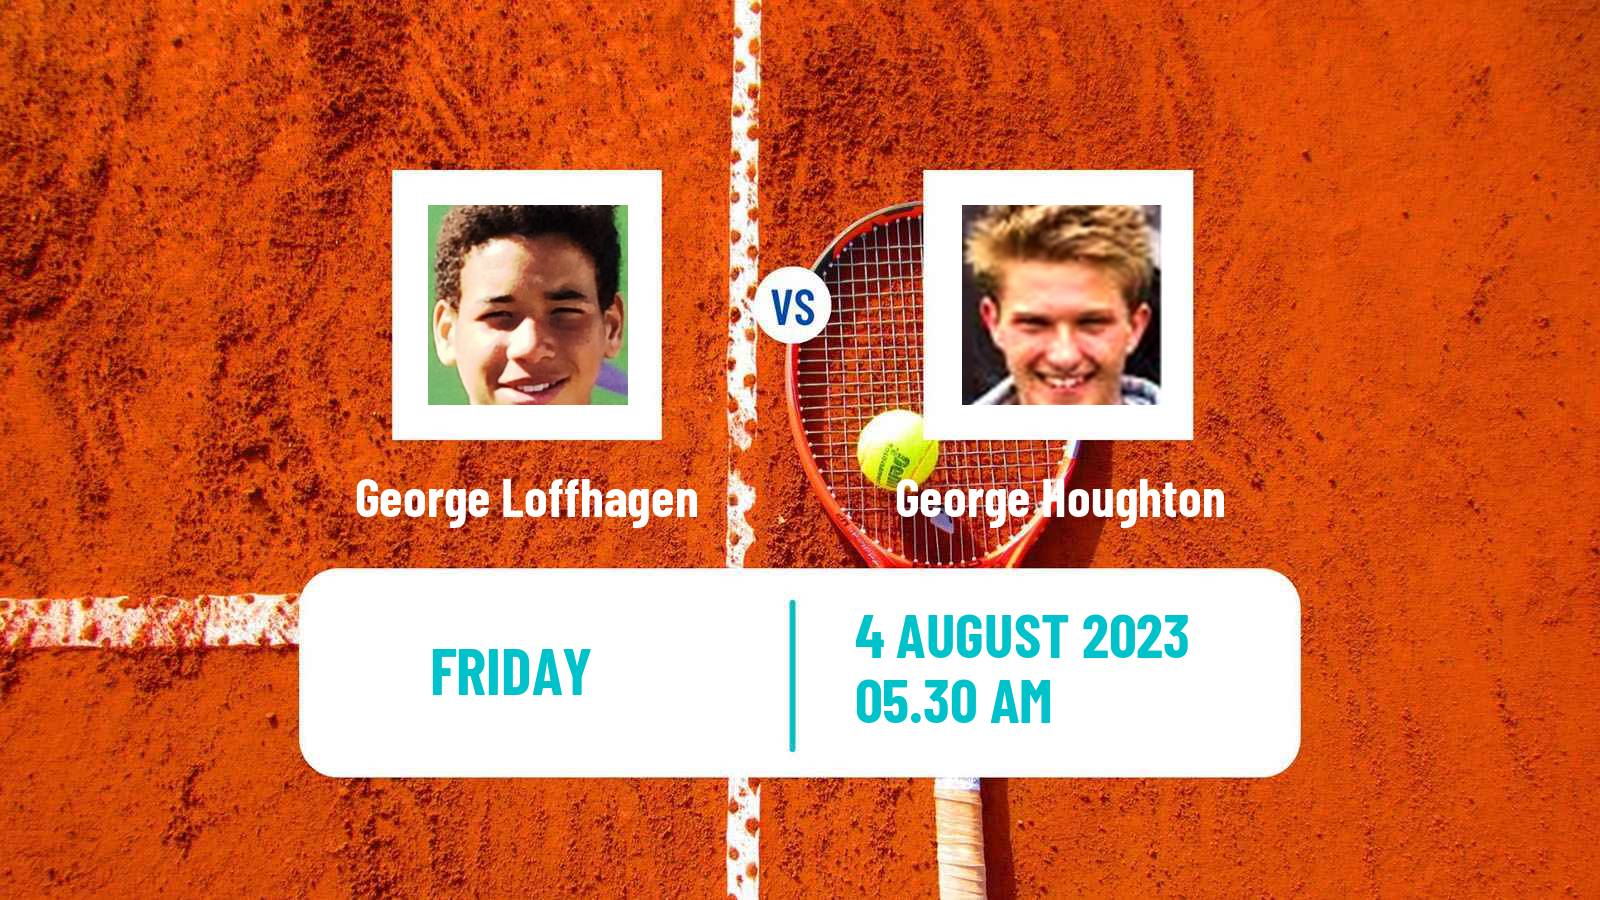 Tennis ITF M25 Roehampton 2 Men George Loffhagen - George Houghton